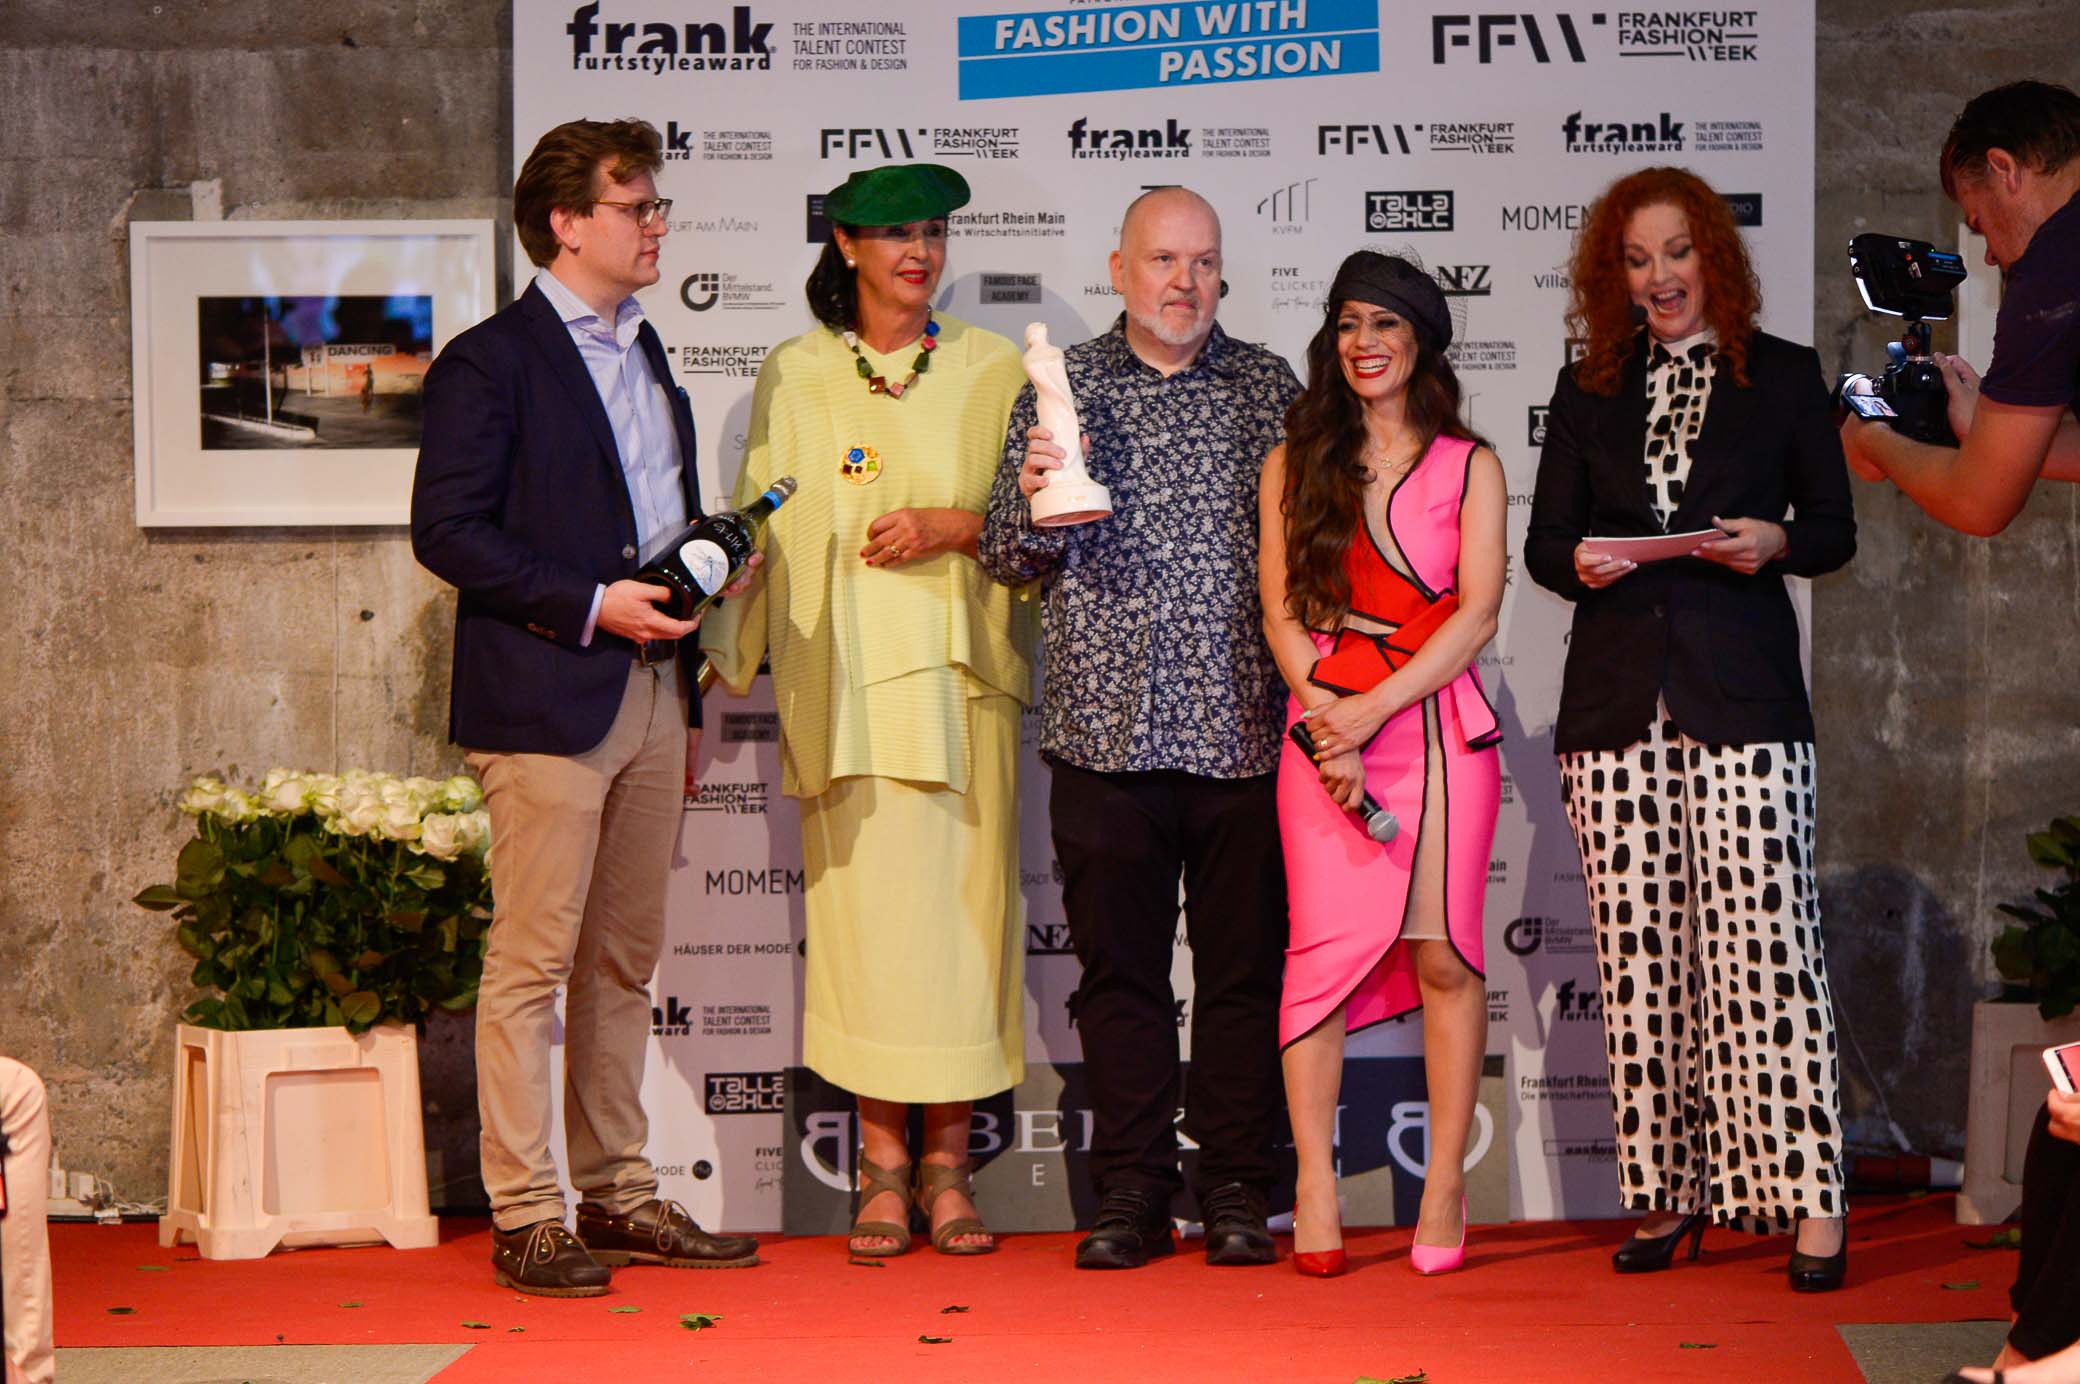 The Frankfurt techno pope TALLA 2XLC was awarded with "FRANK - The Trophy" for his lifetime achievement. Photo: StudioZeta